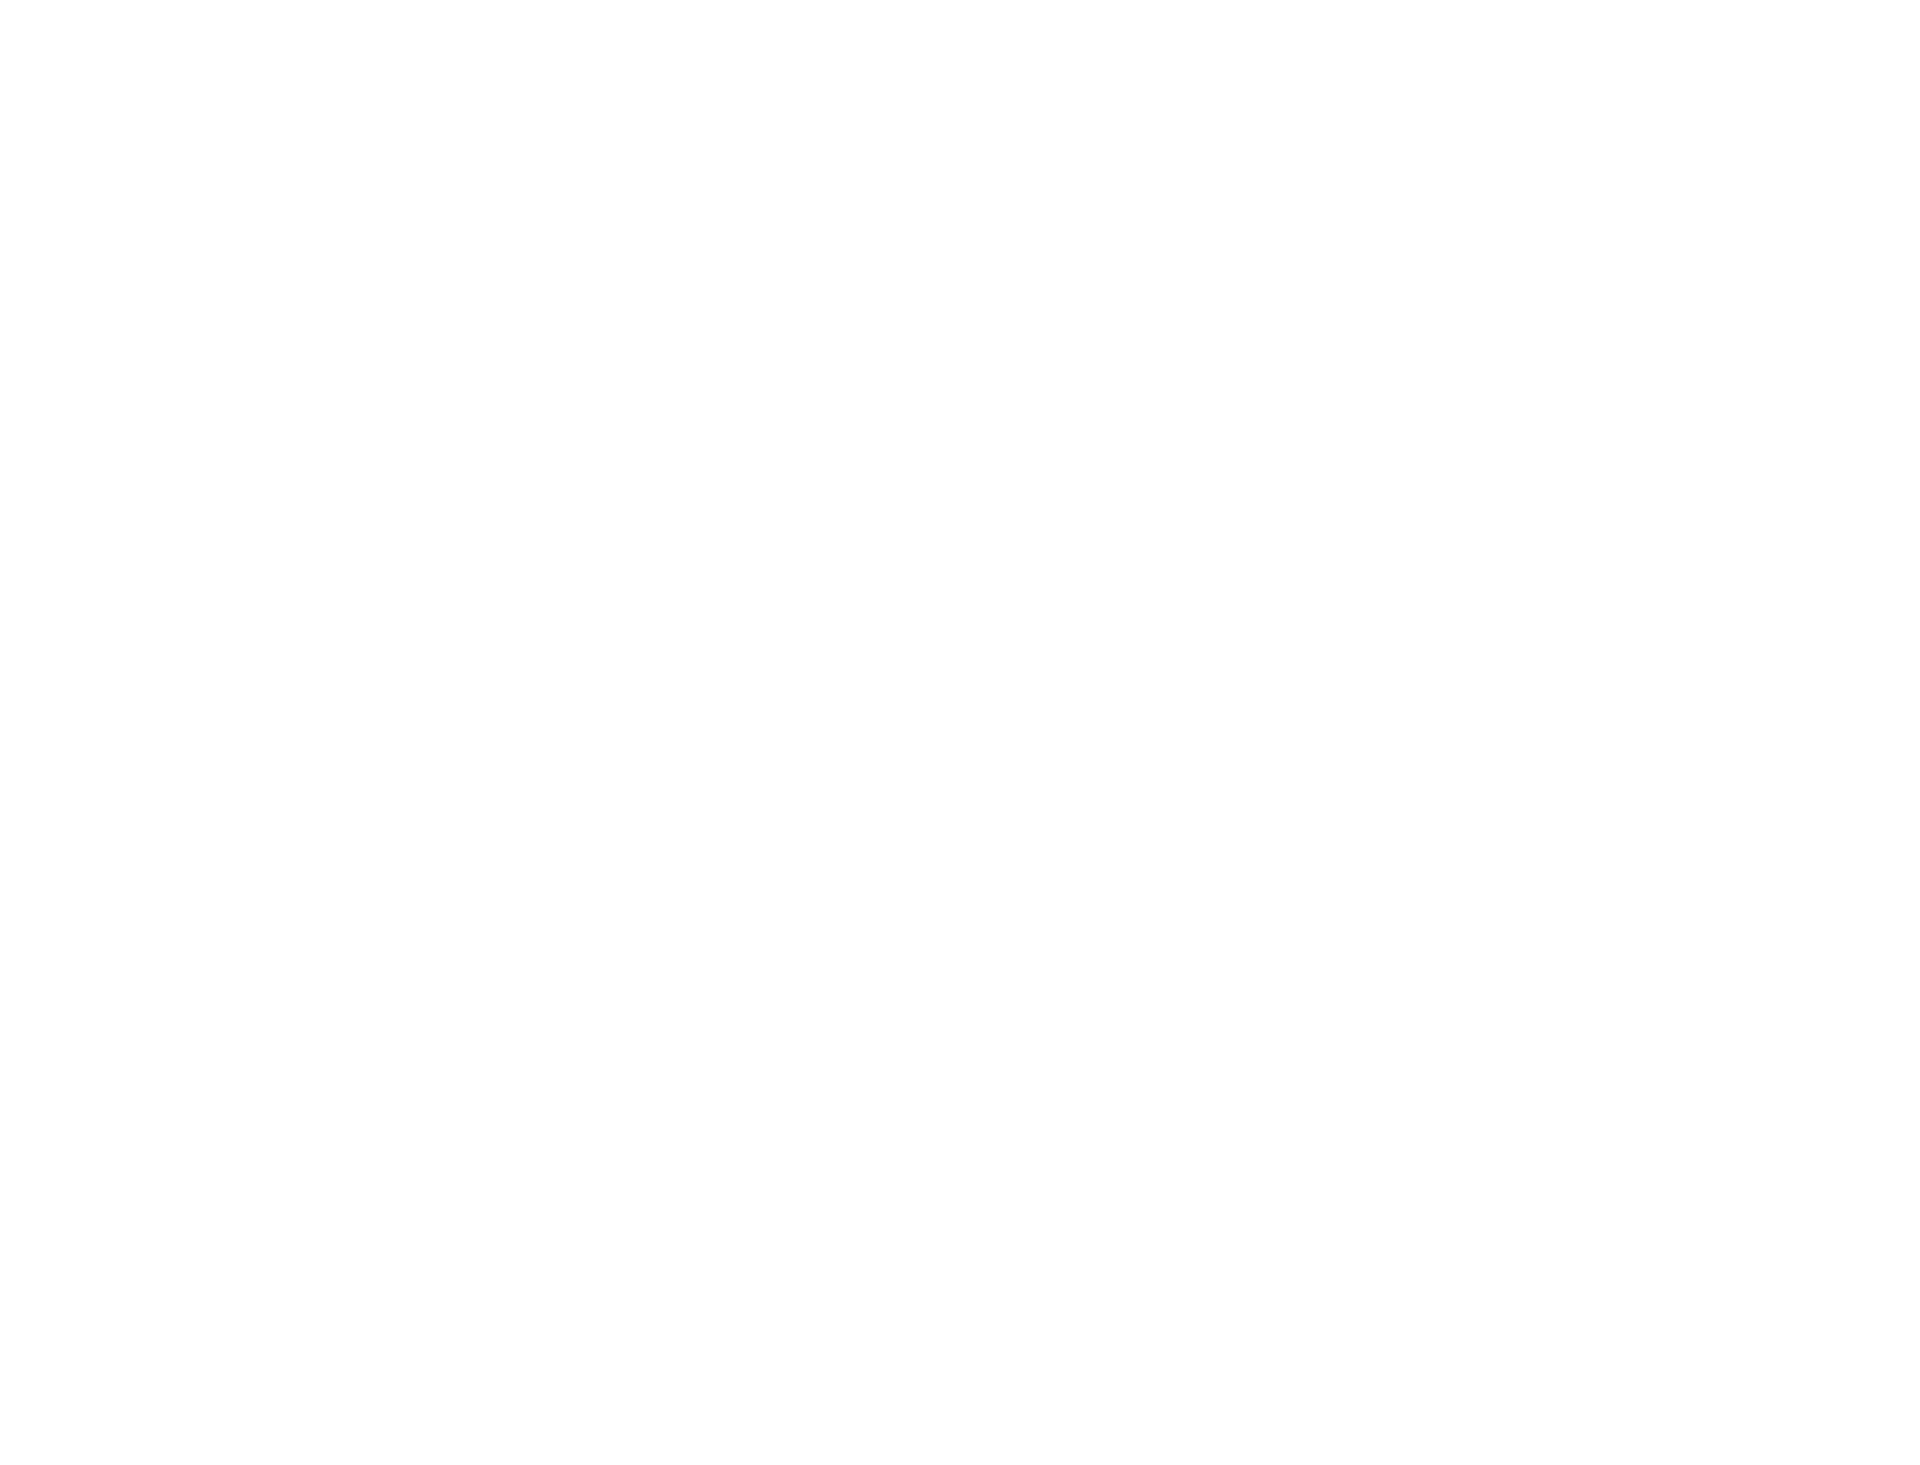 Urban Design Partners